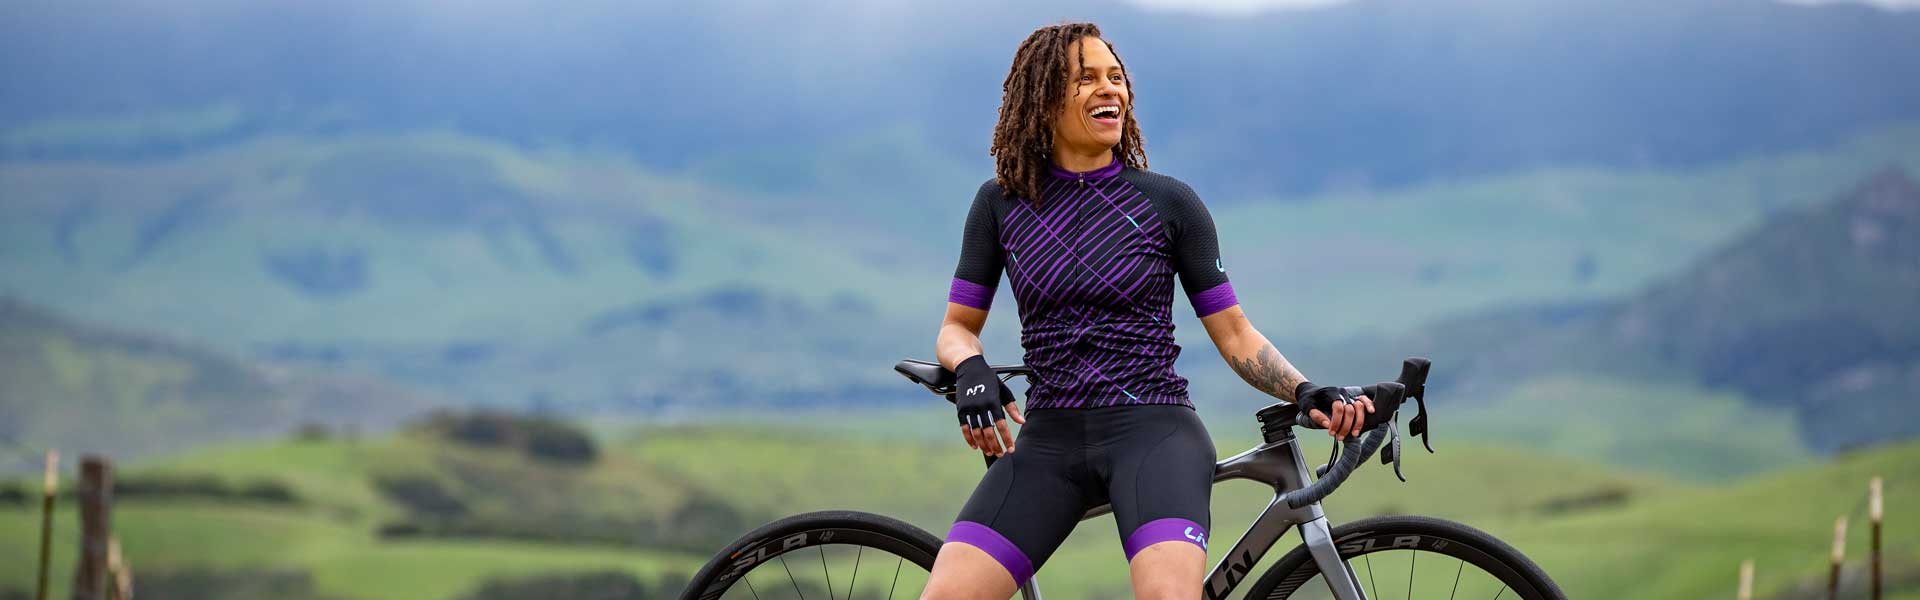 women's cycling clothing australia